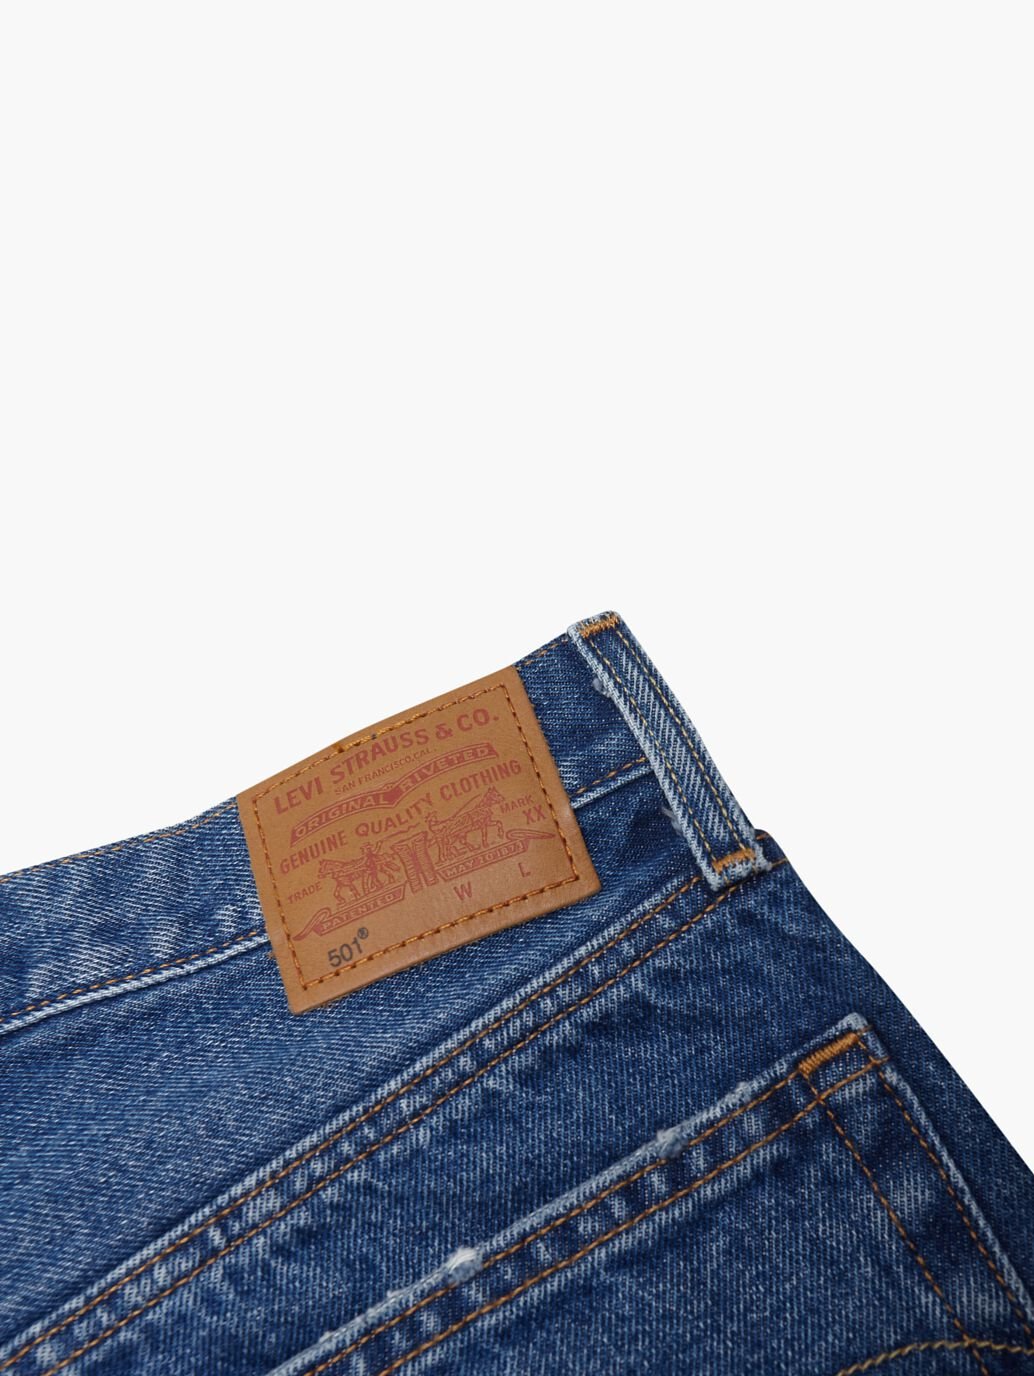 Levi's Womens 501 Original Jeans